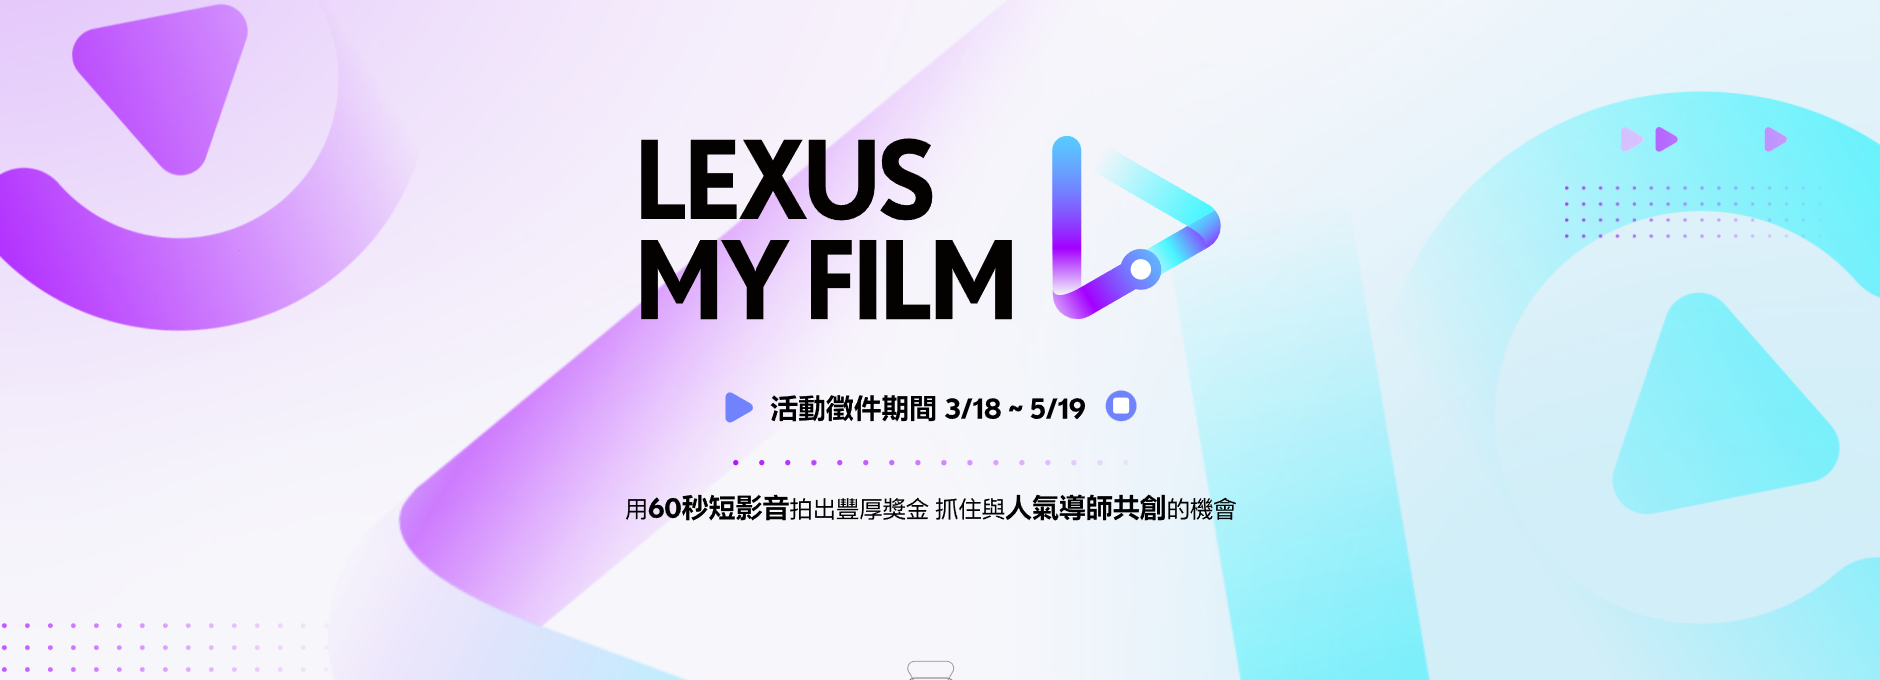 Featured image for “【LEXUS MY FILM短影音生活影展】邀請學生參與，累積實力從競賽開始”